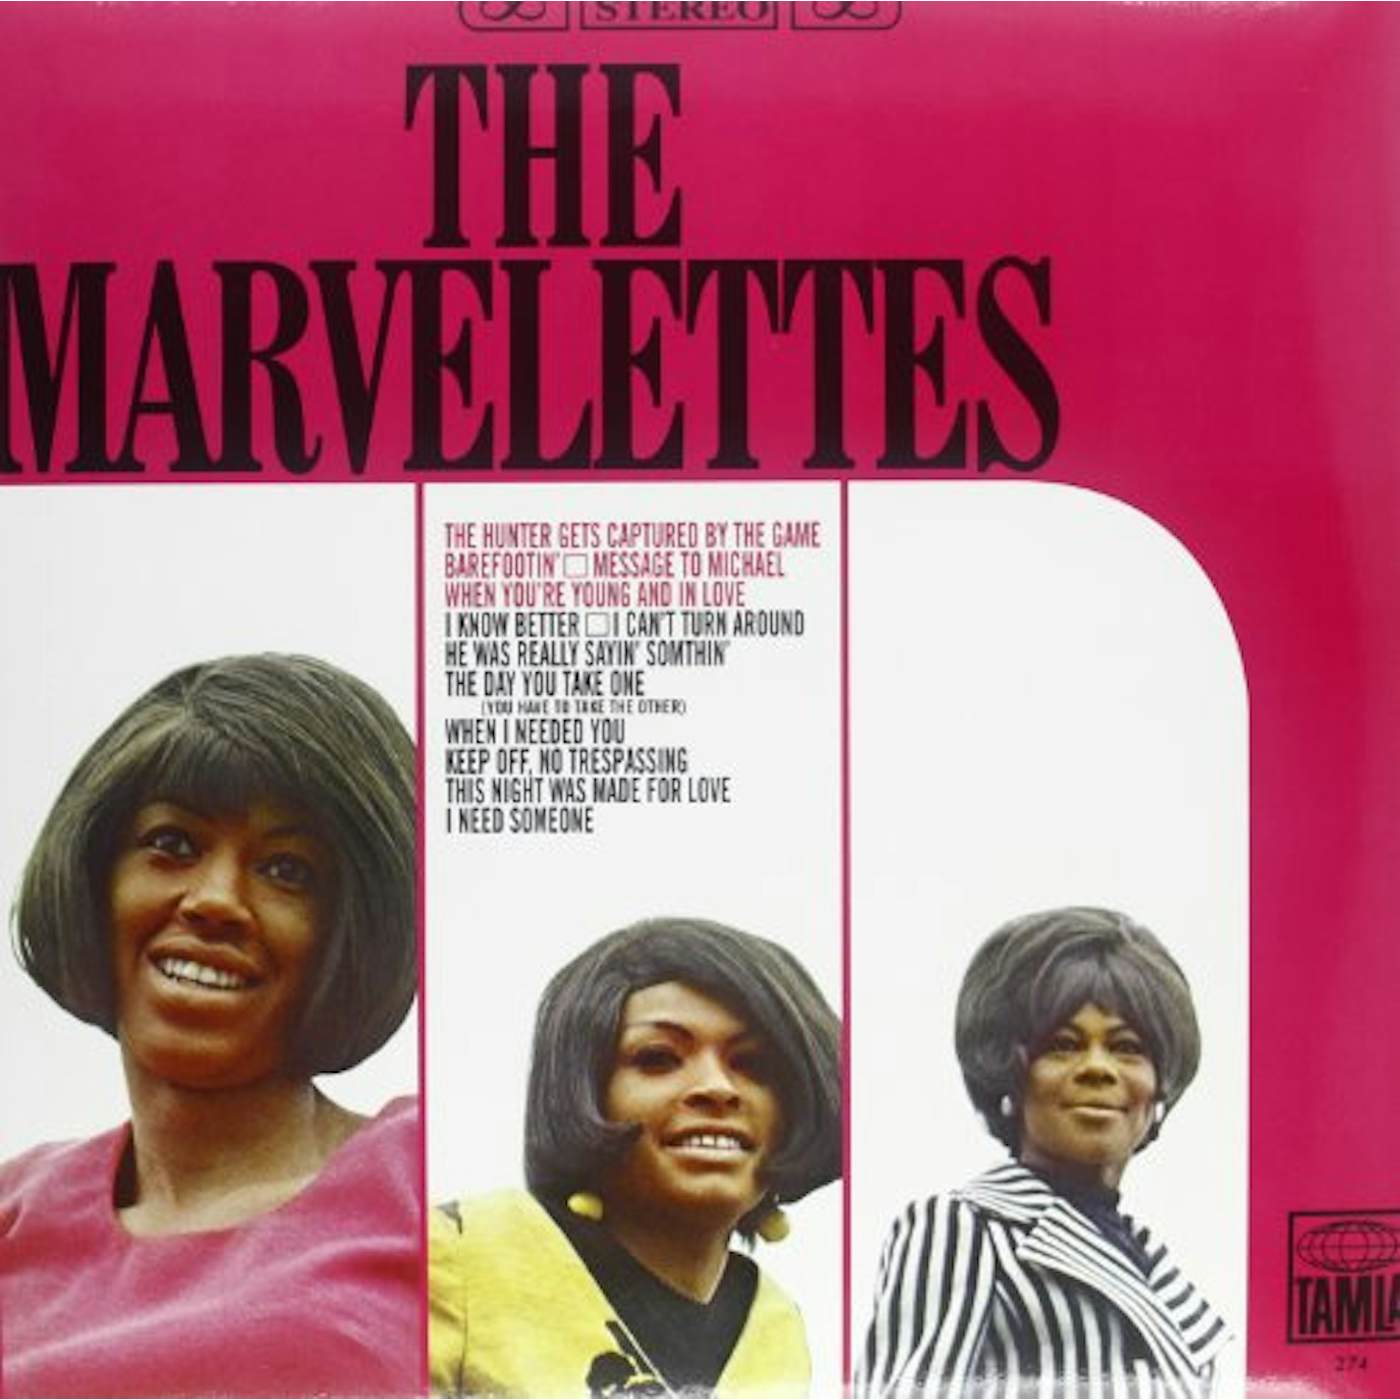 The Marvelettes Vinyl Record